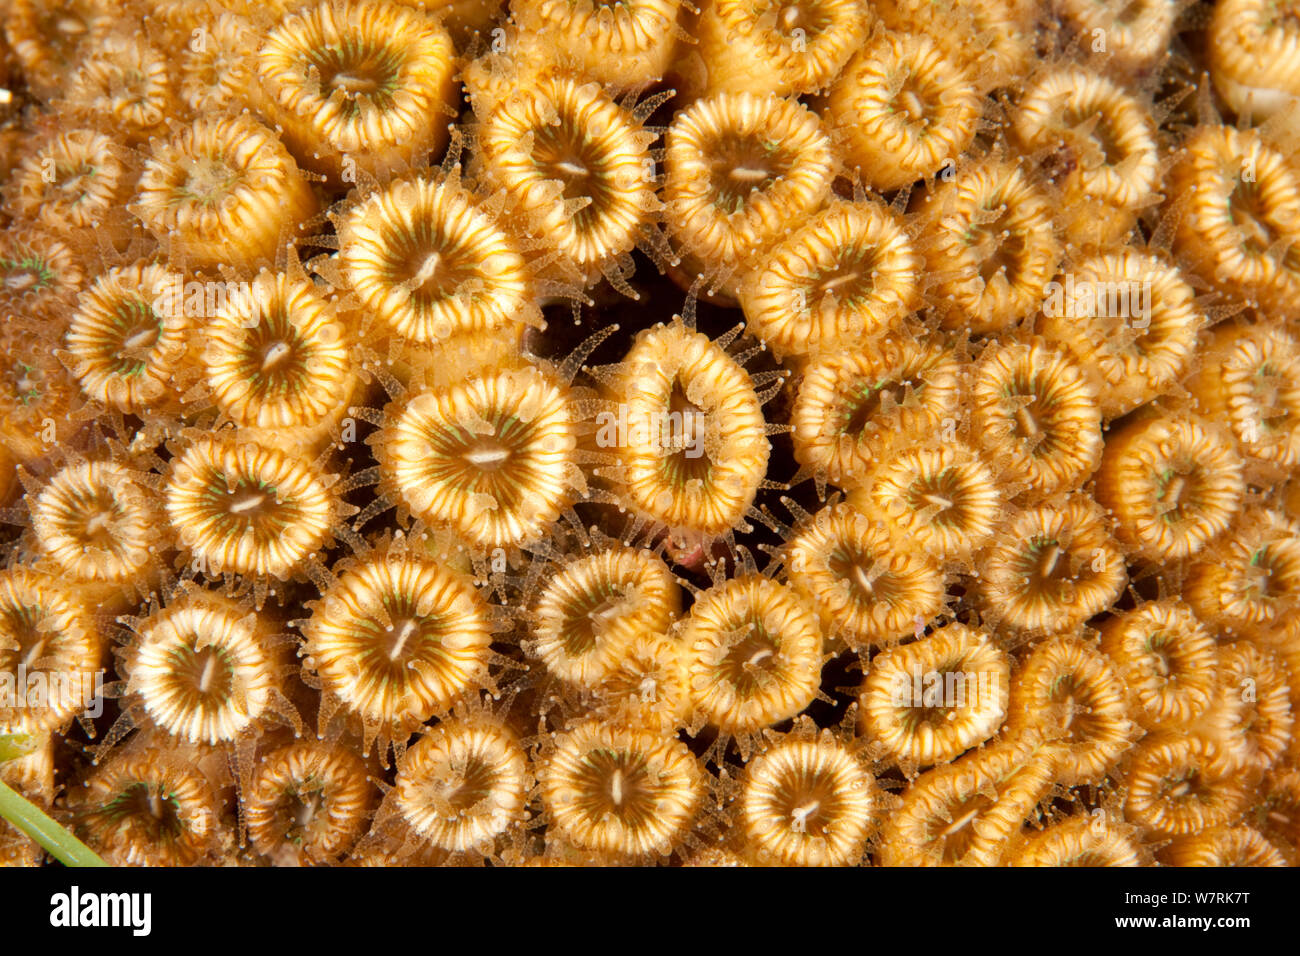 Pillow coral (Cladocora caespitosa) Ischia Island, Italy, Tyrrhenian Sea, Mediterranean Stock Photo